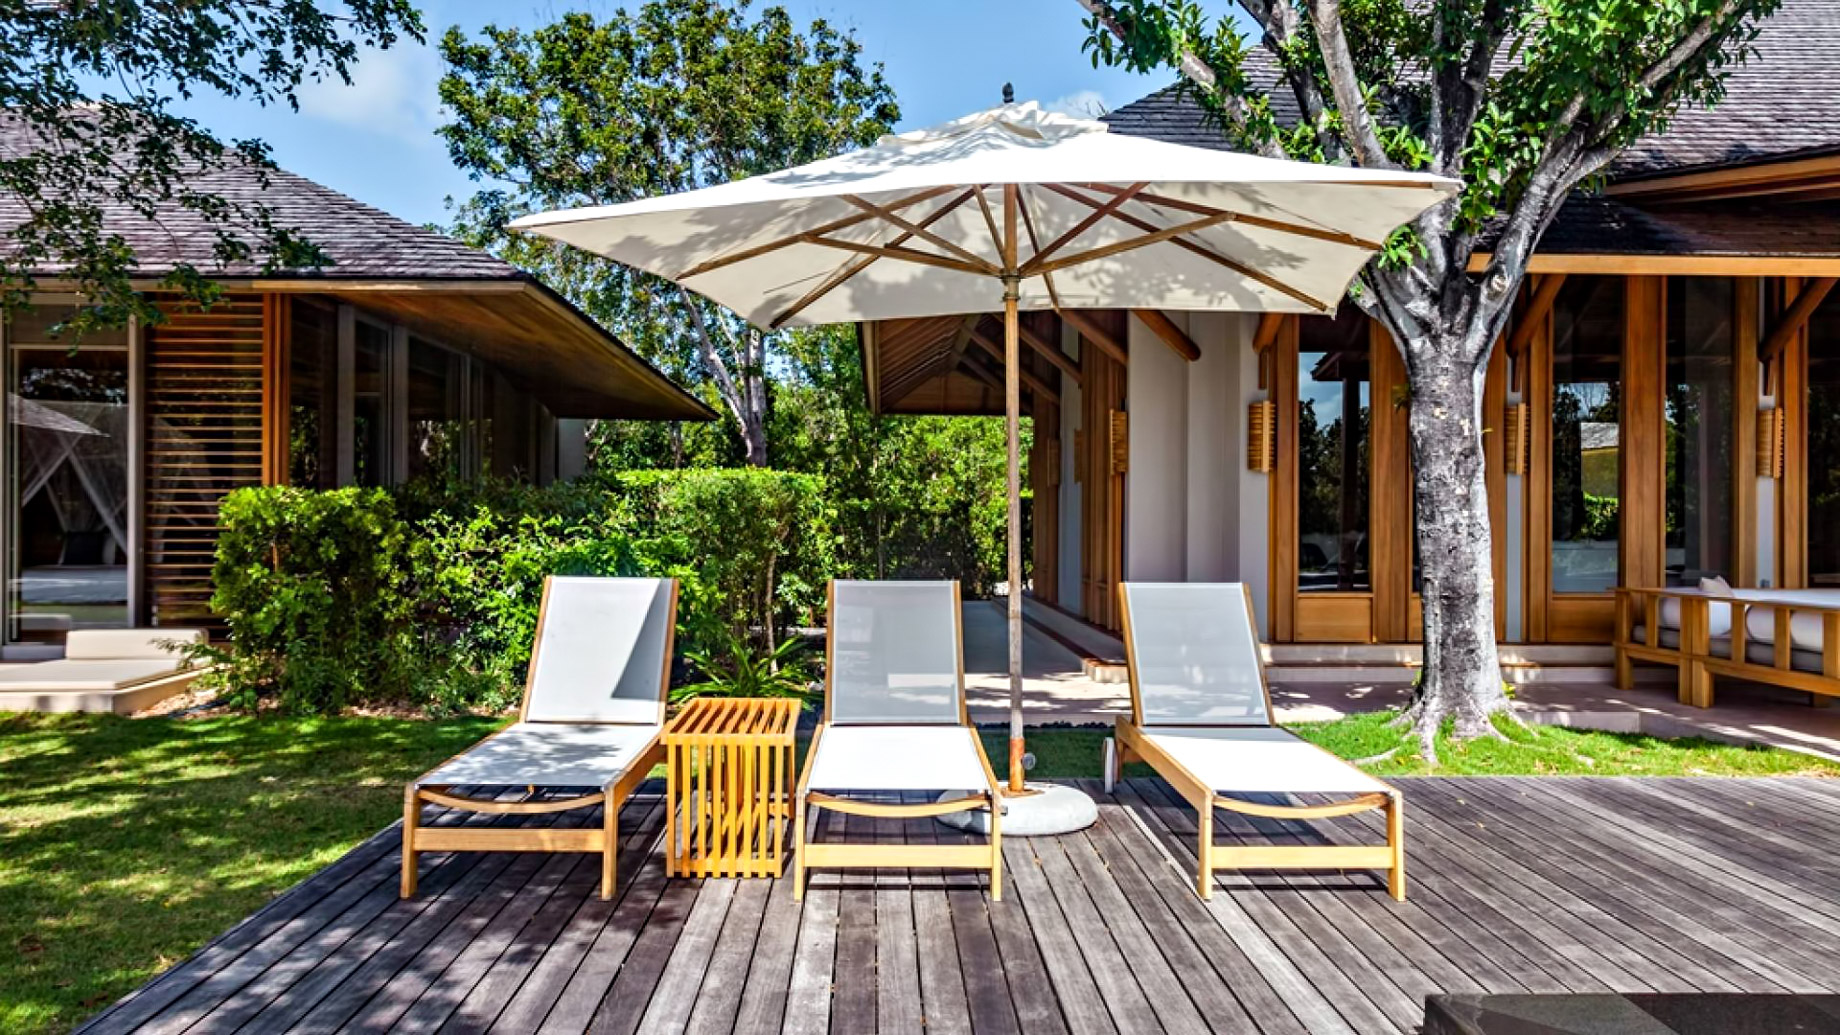 Amanyara Resort - Providenciales, Turks and Caicos Islands - 3 Bedroom Tranquility Villa Pool Deck Chairs